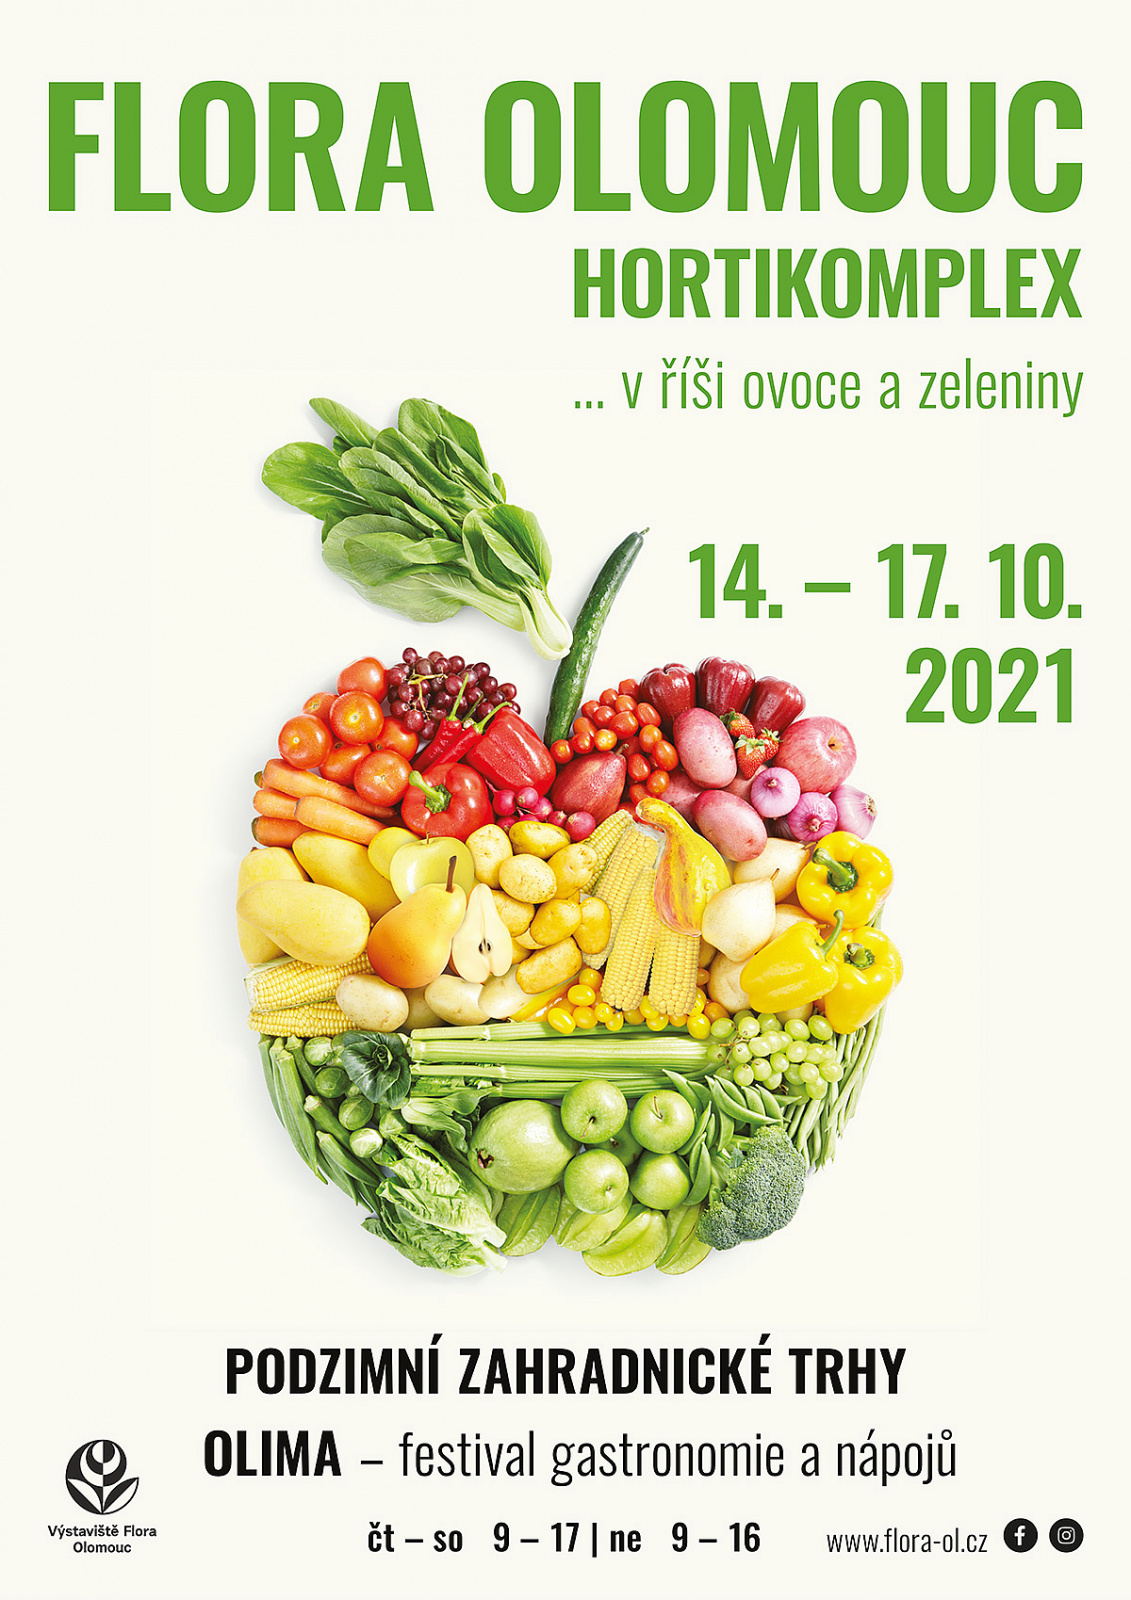 Flora Olomouc - Hortikomplex